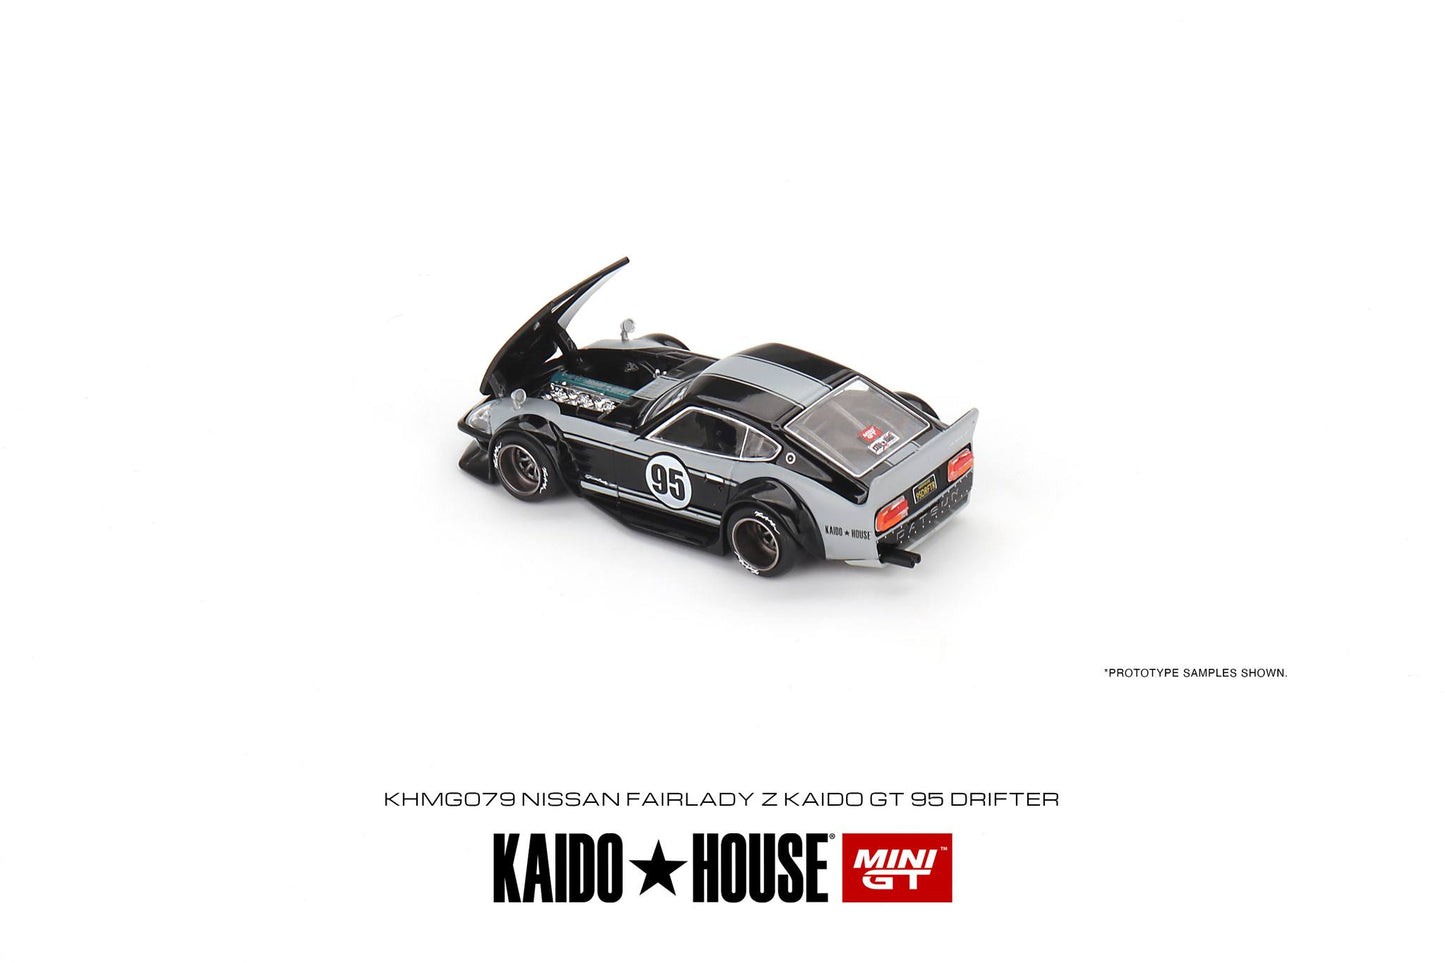 Mini GT x Kaido★House 1/64 Nissan Fairlady Z Kaido GT 95 Drifter V1 – Black Grey – Limited Edition